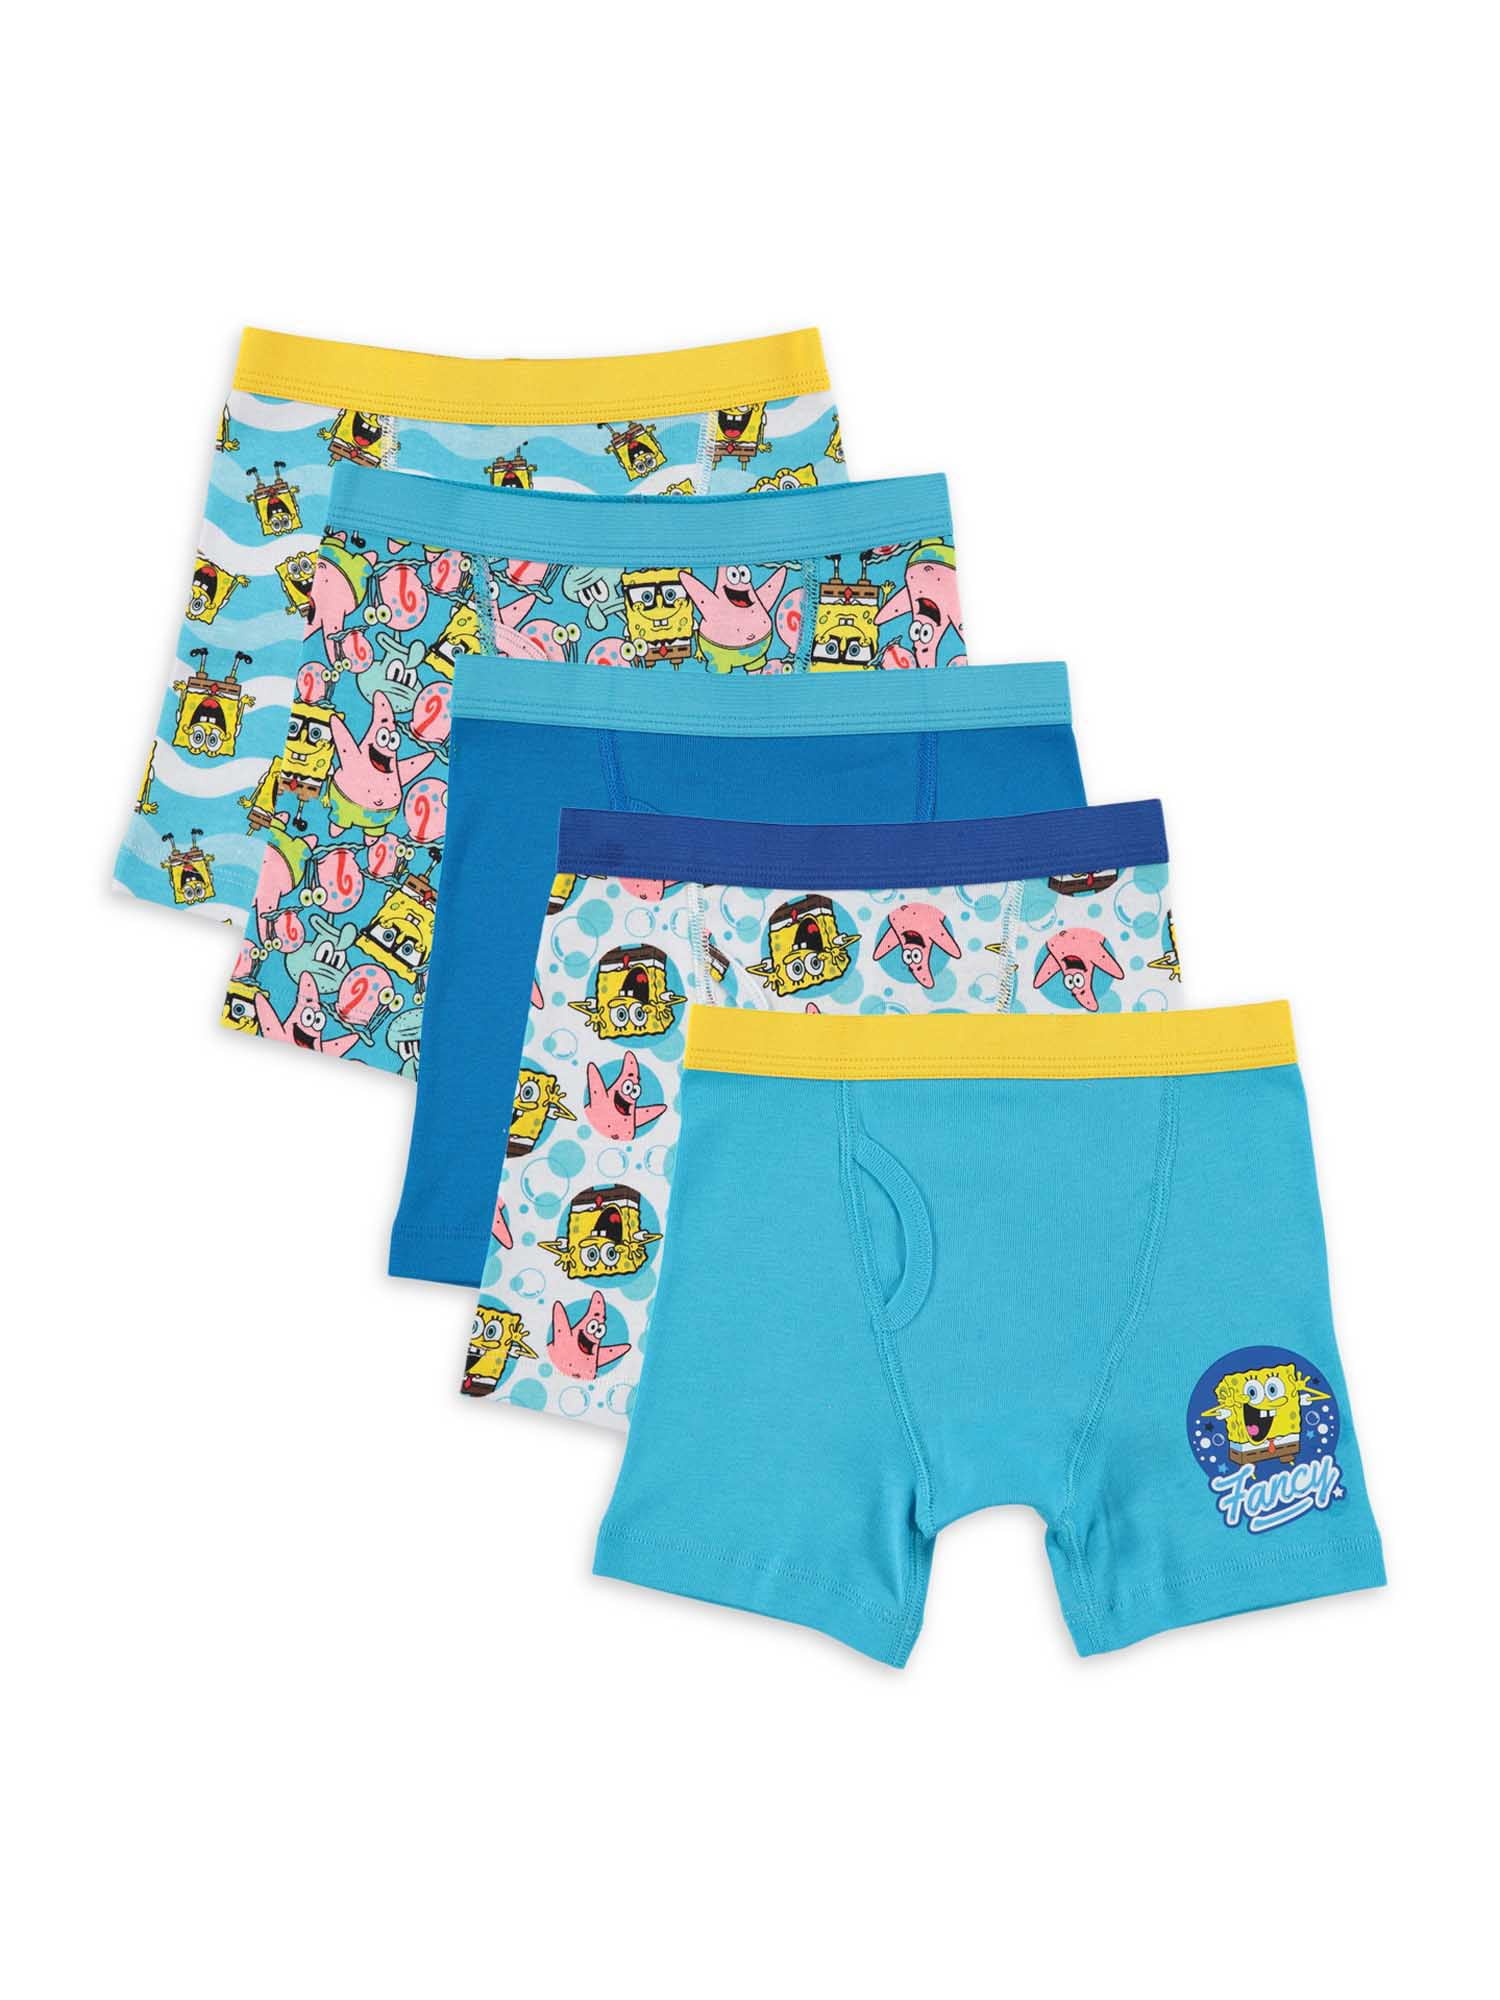 SpongeBob SquarePants Boys Underwear, 5 Pack Boxer Briefs Sizes 4-6